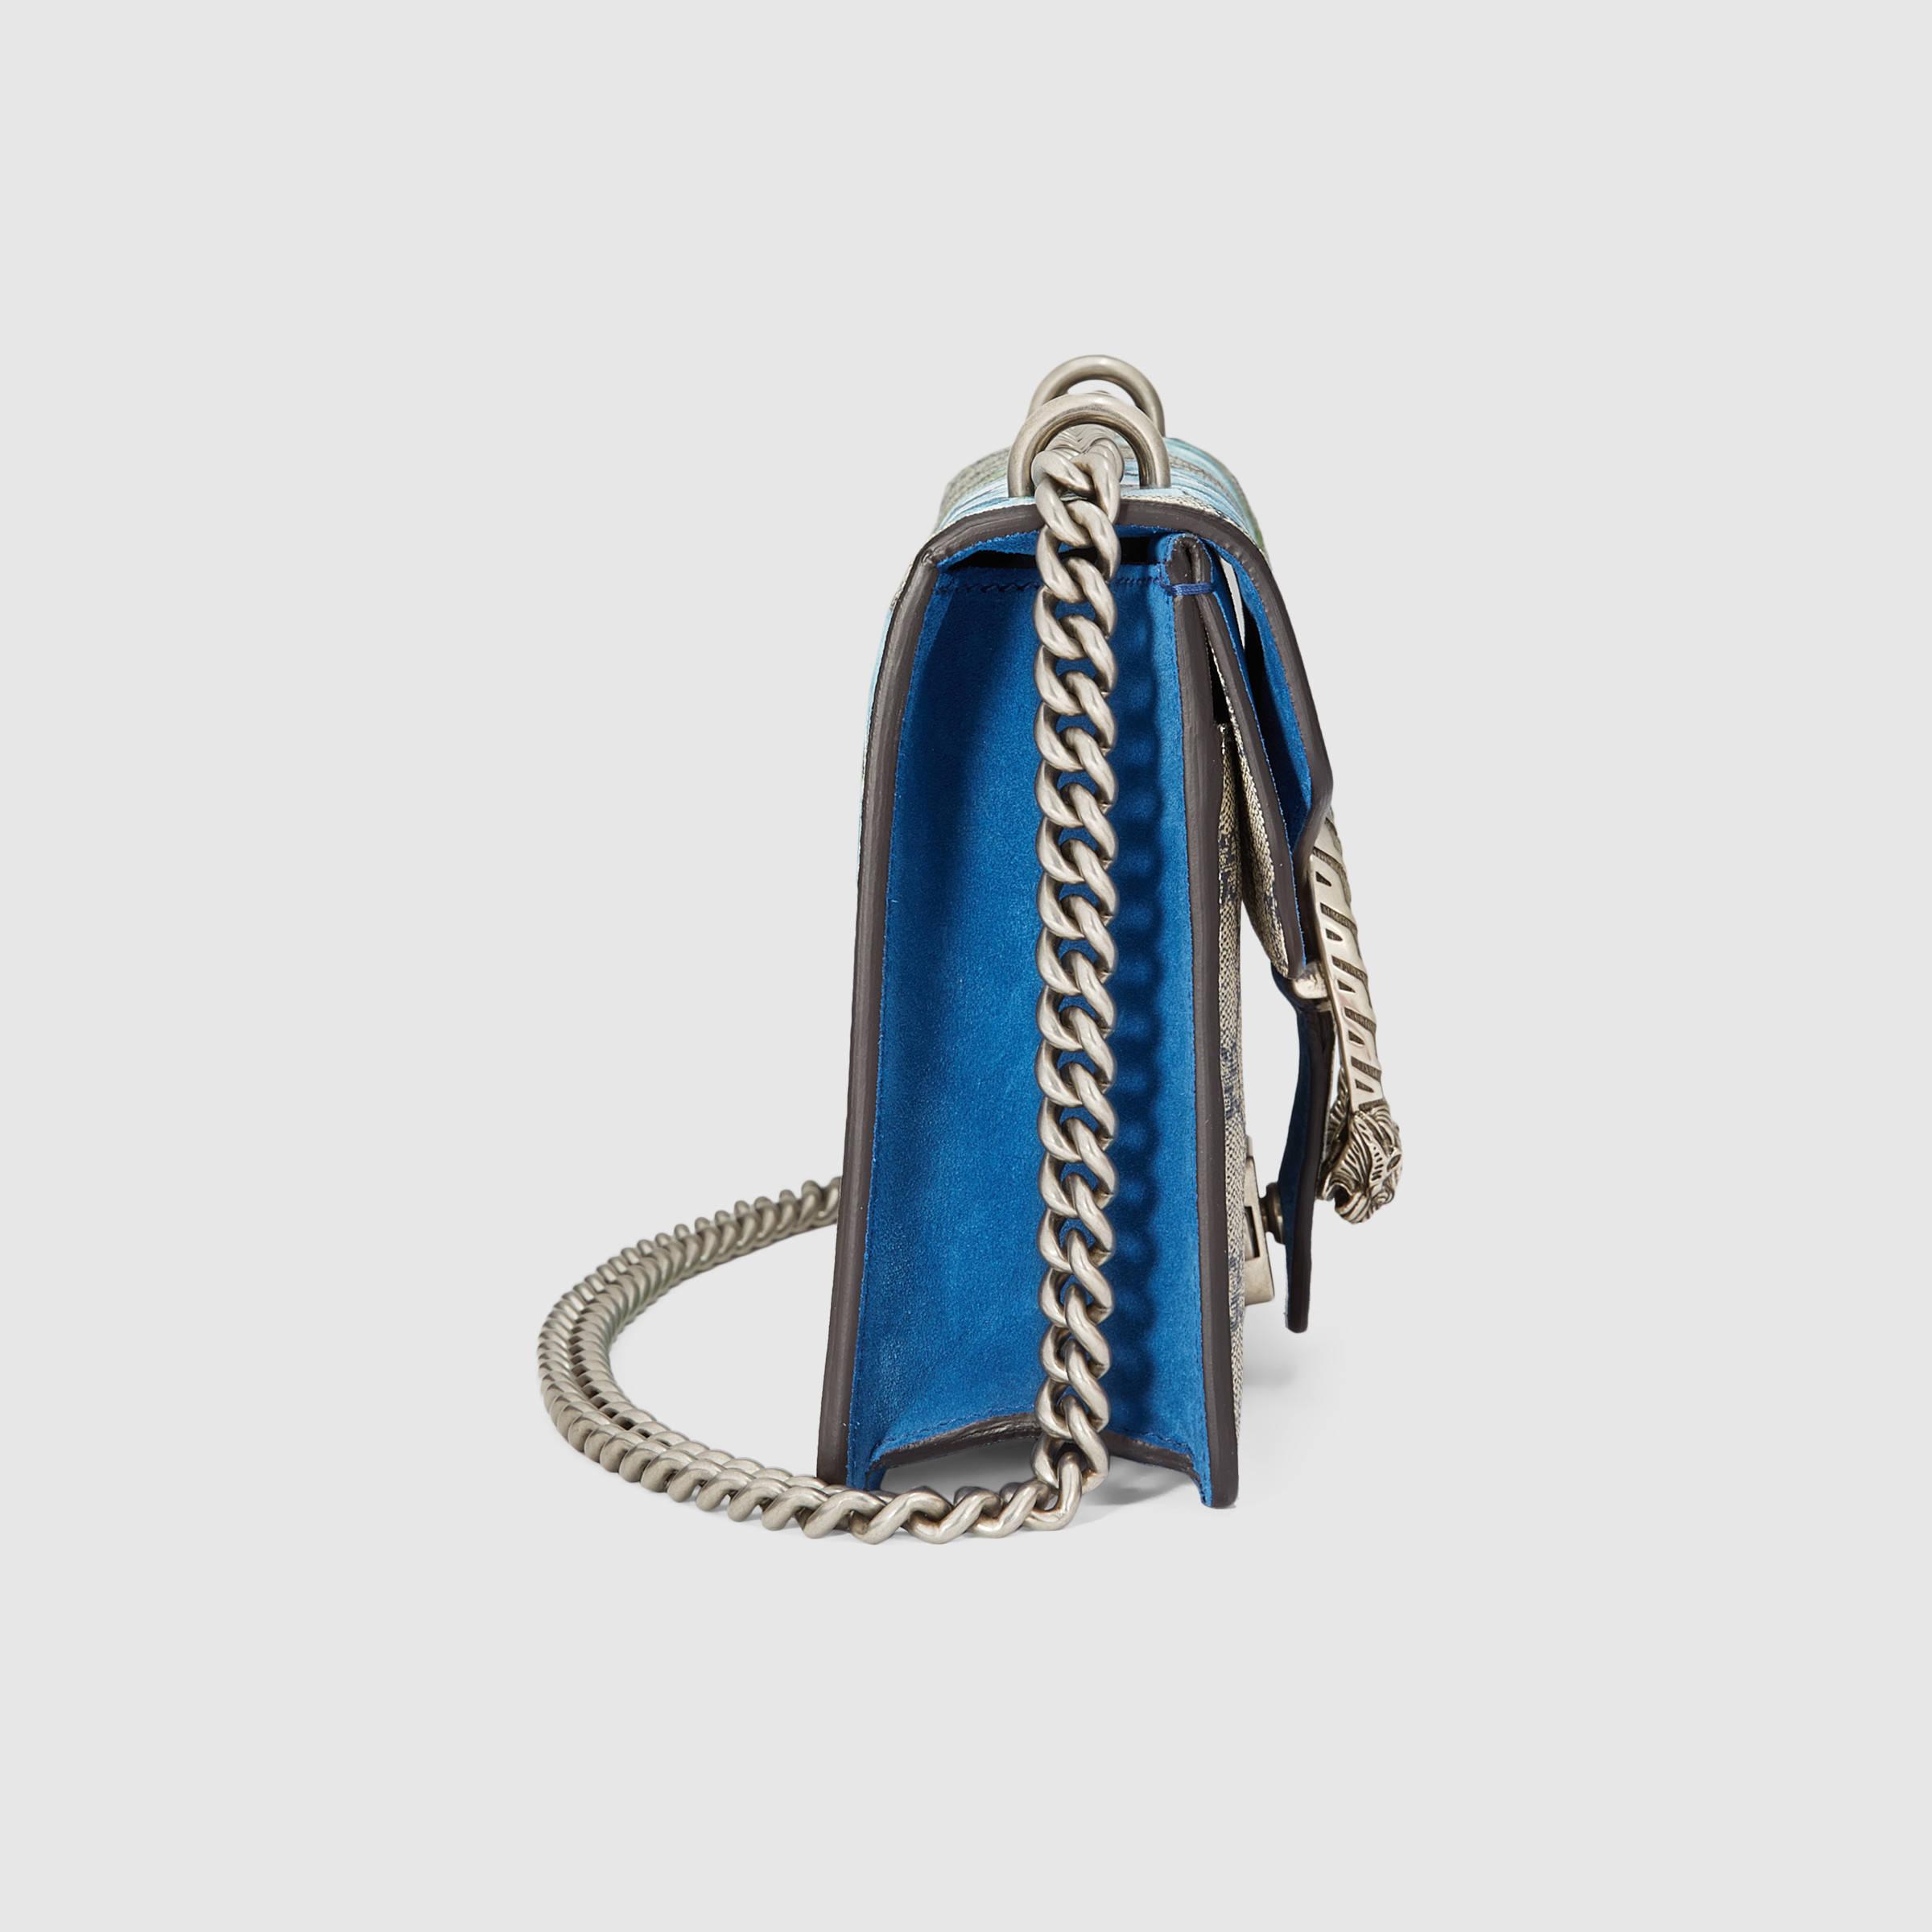 Lyst - Gucci Dionysus Gg Blooms Mini Bag in Blue